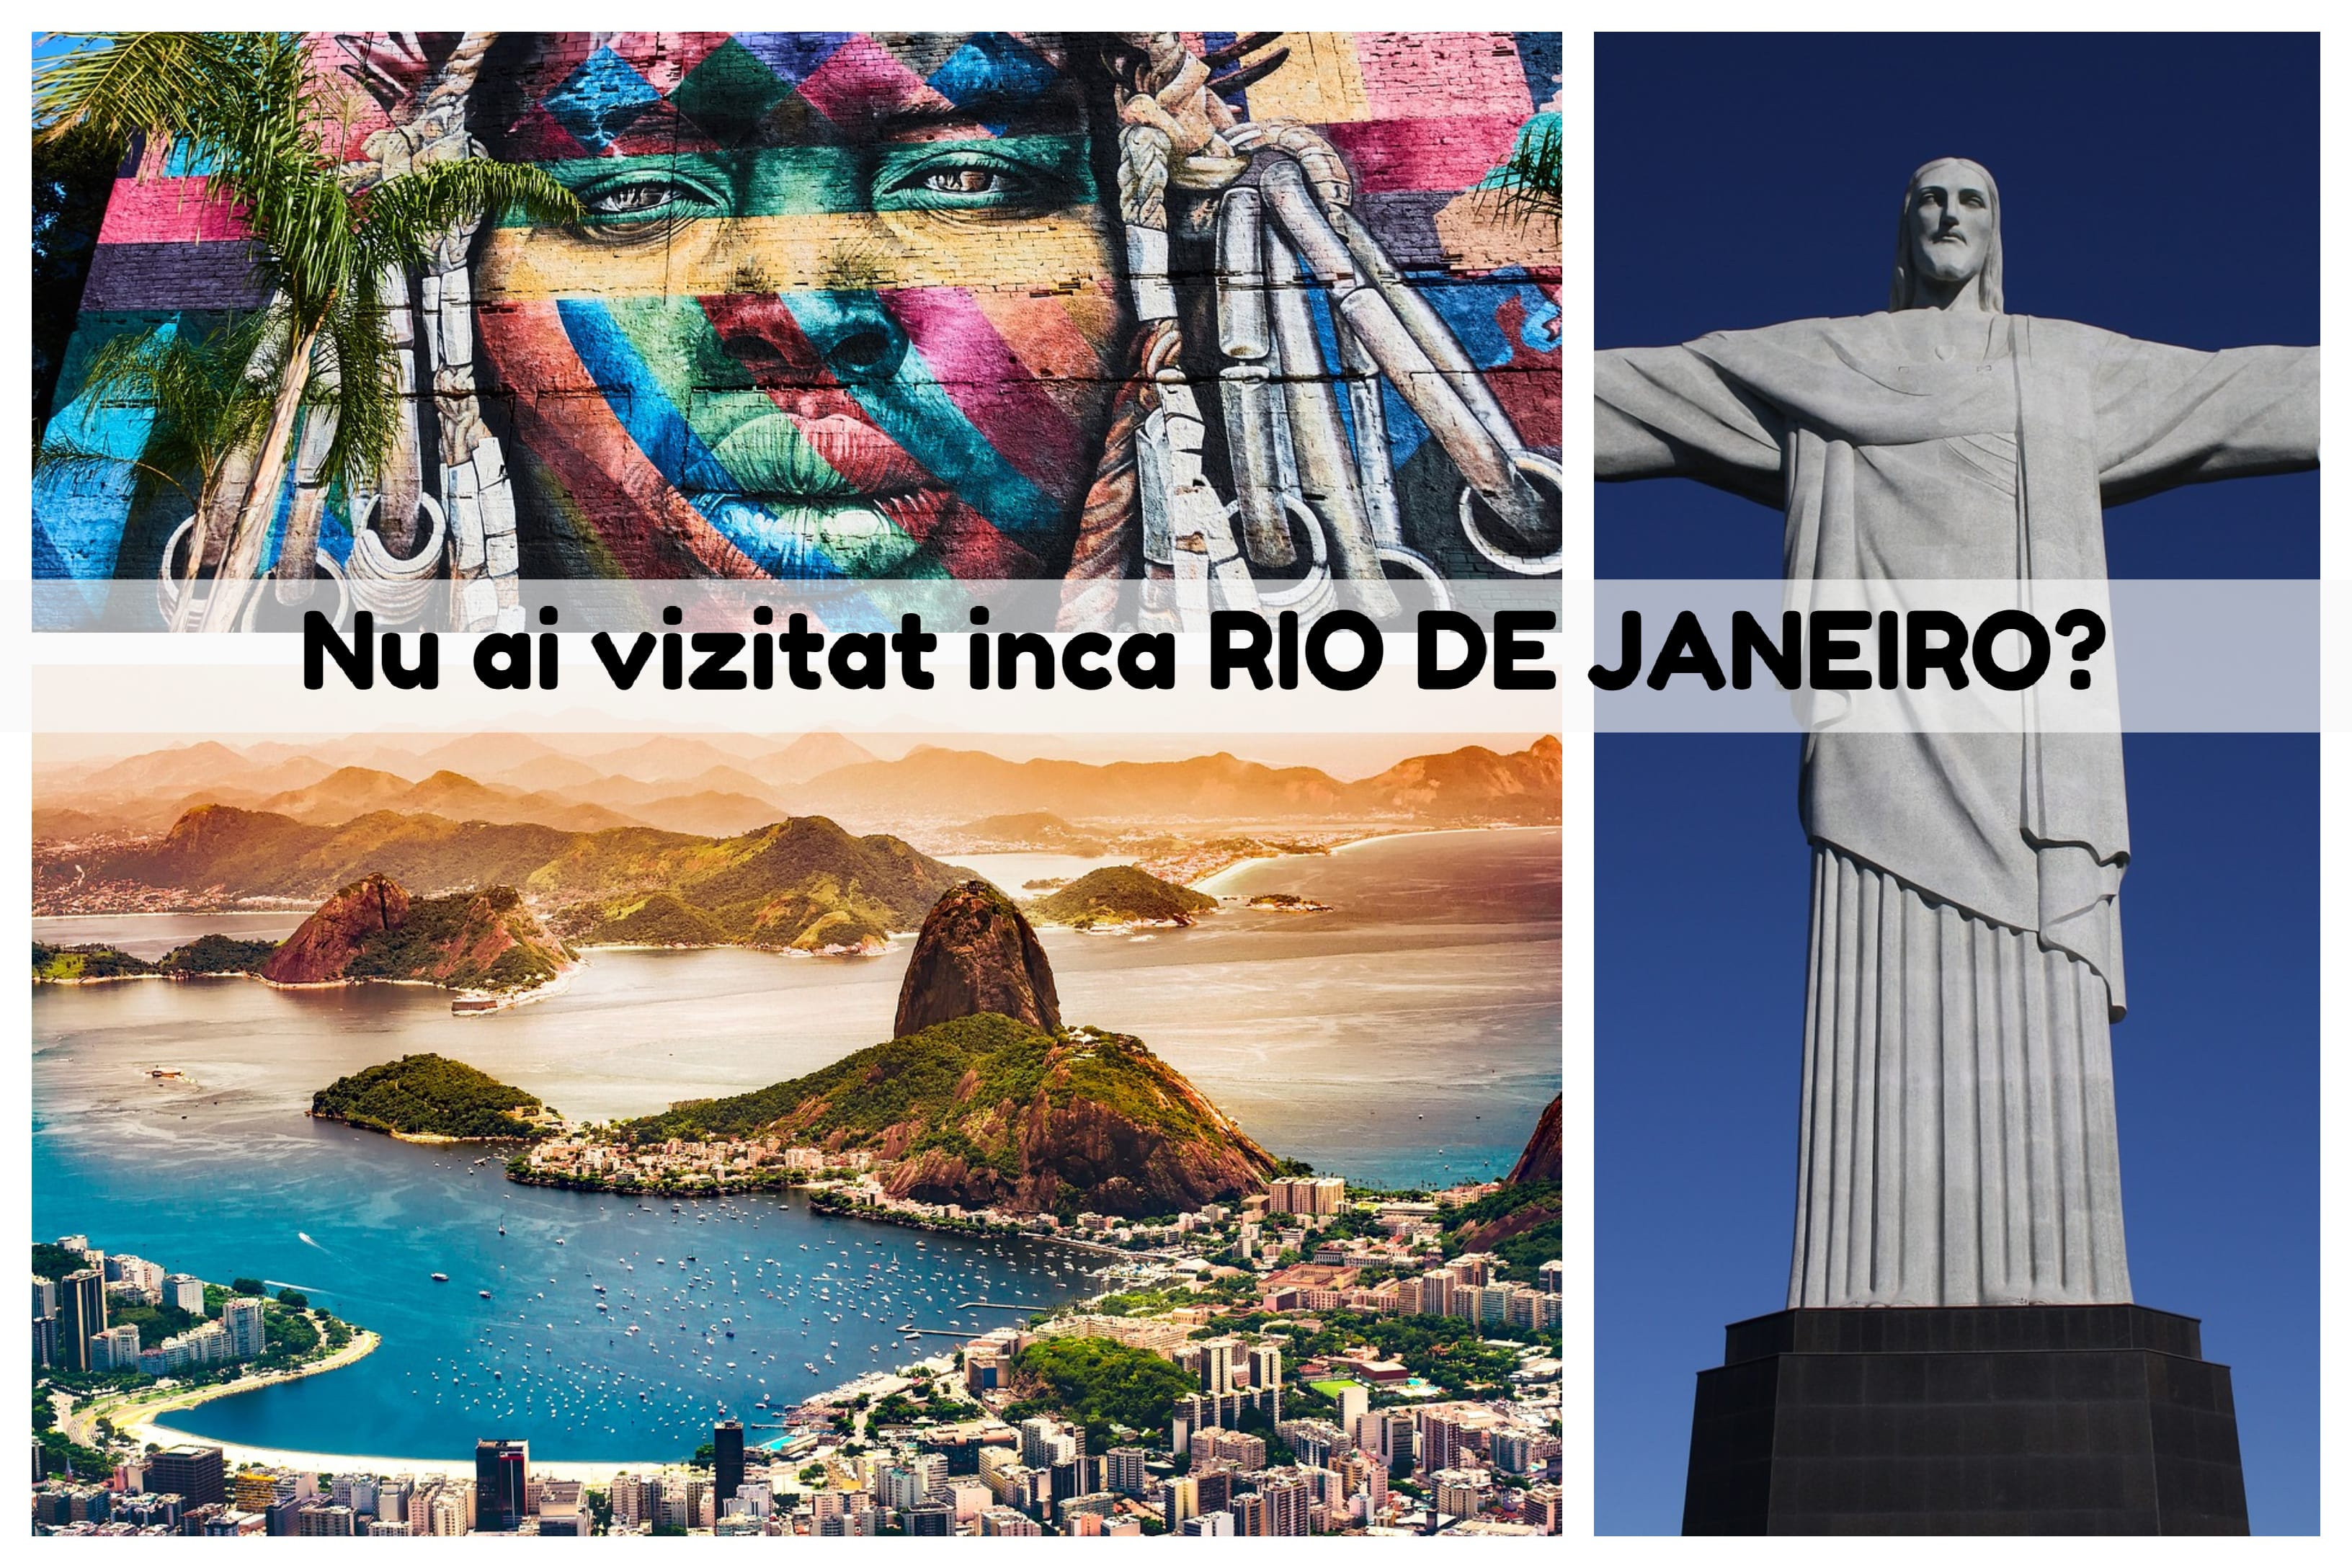 Rio de Janeiro - imagini din Brazilia, destinatie cuprinsa in oferta KLM